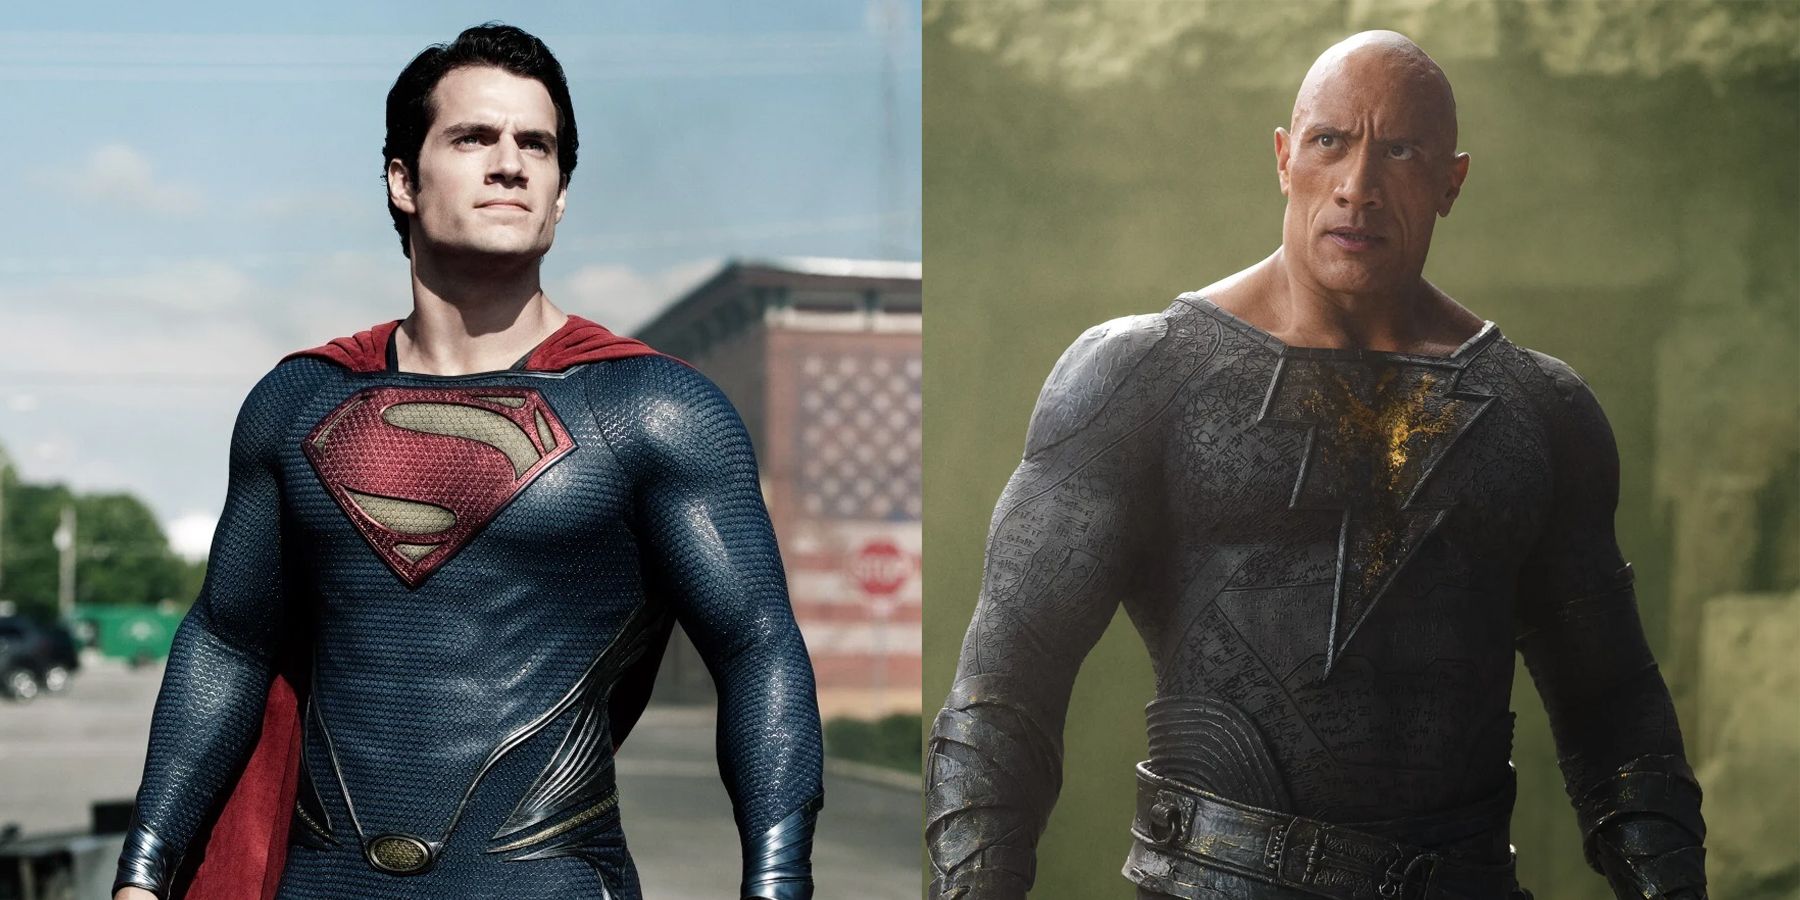 Dwayne Johnson welcomes Henry Cavill as Superman